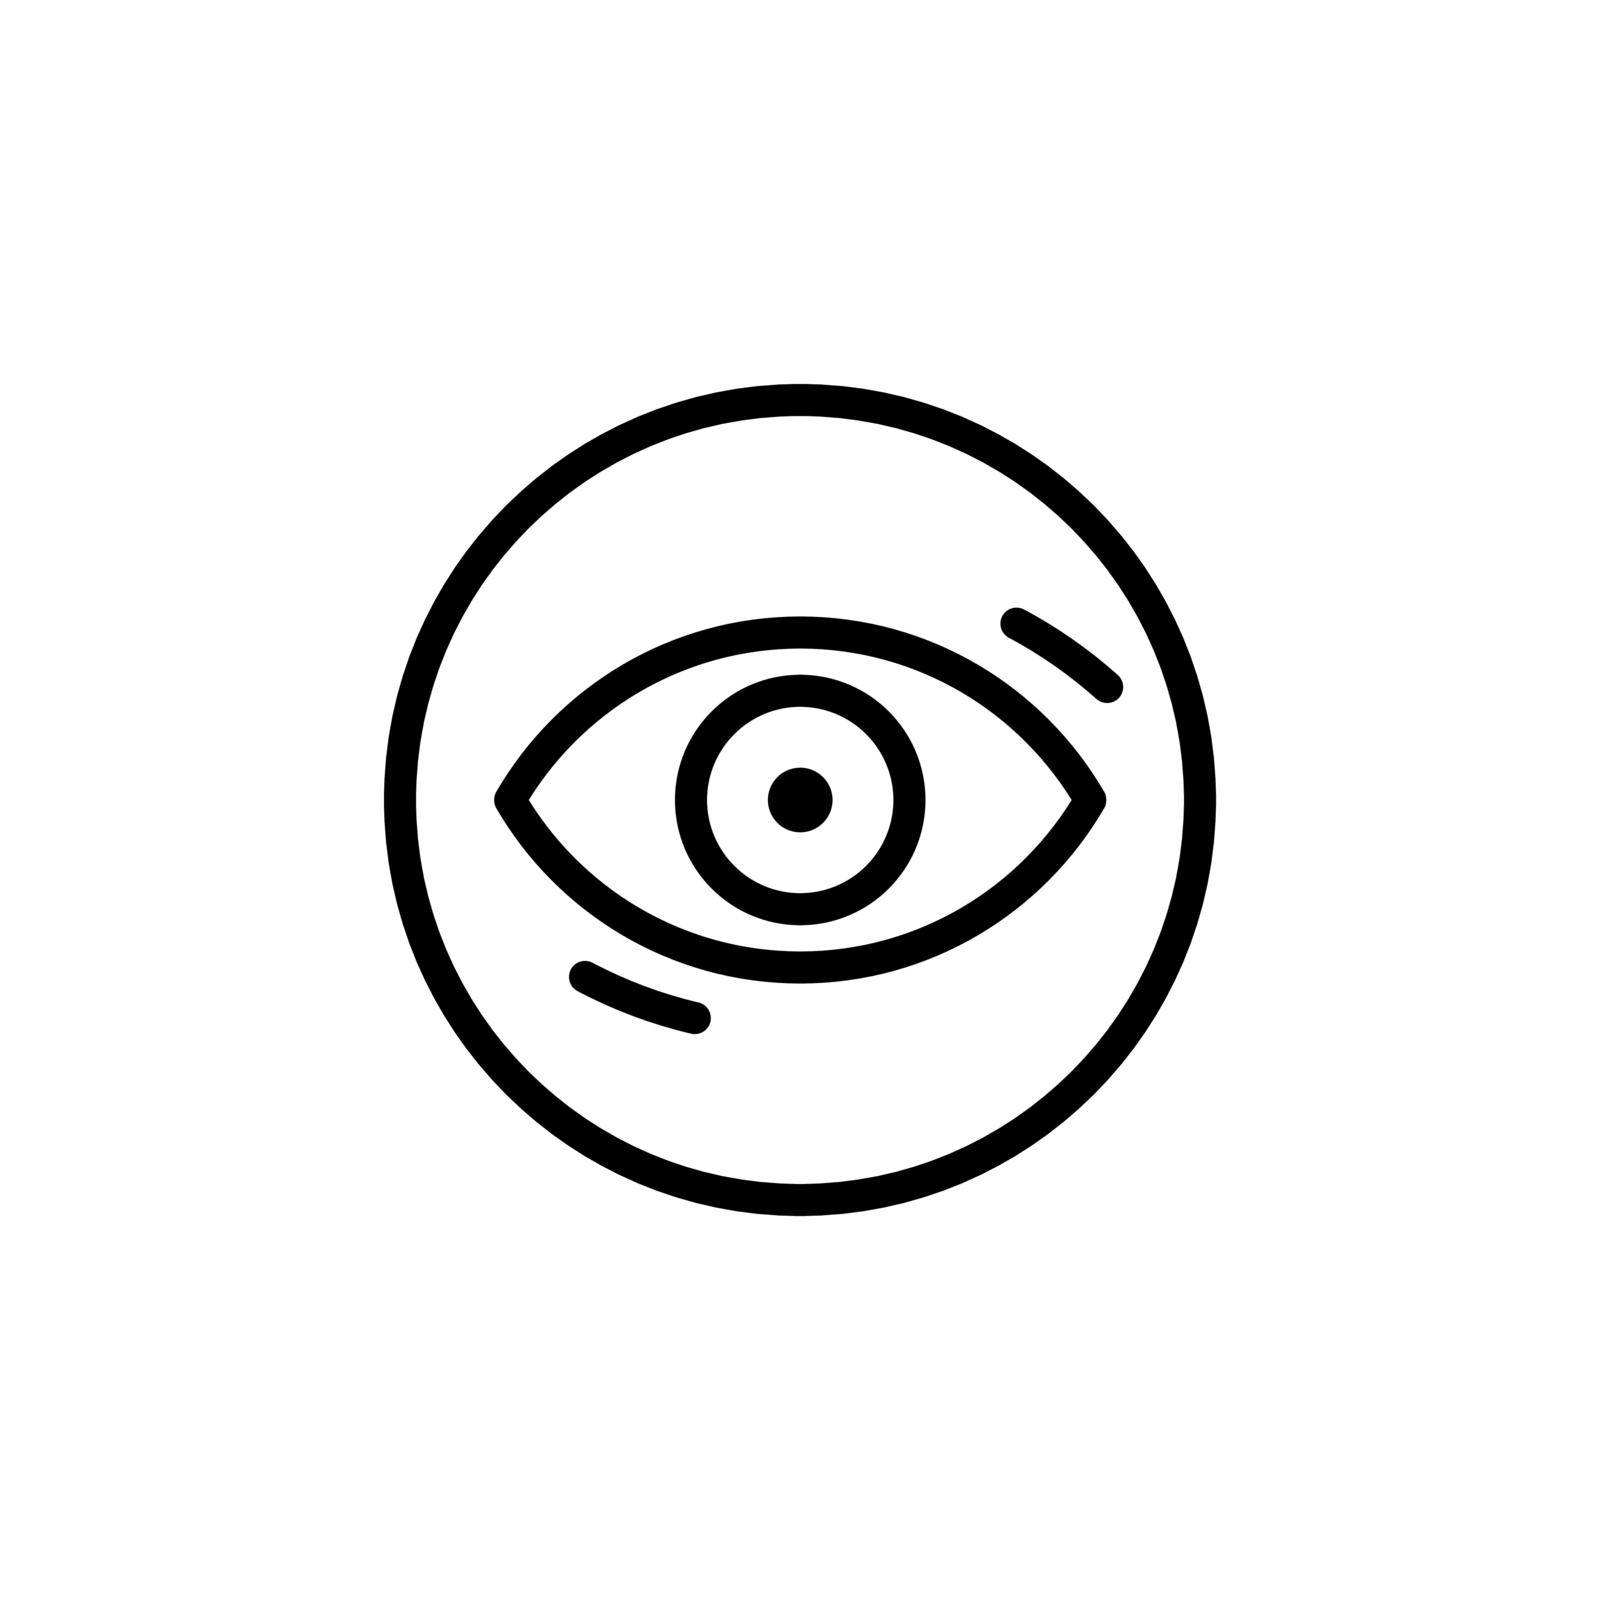 Laser eye surgery linear logo. Vector minimal illustration of outline eye icon. Editable stroke. Design template for medicine clinics or centers, laser eye treatment